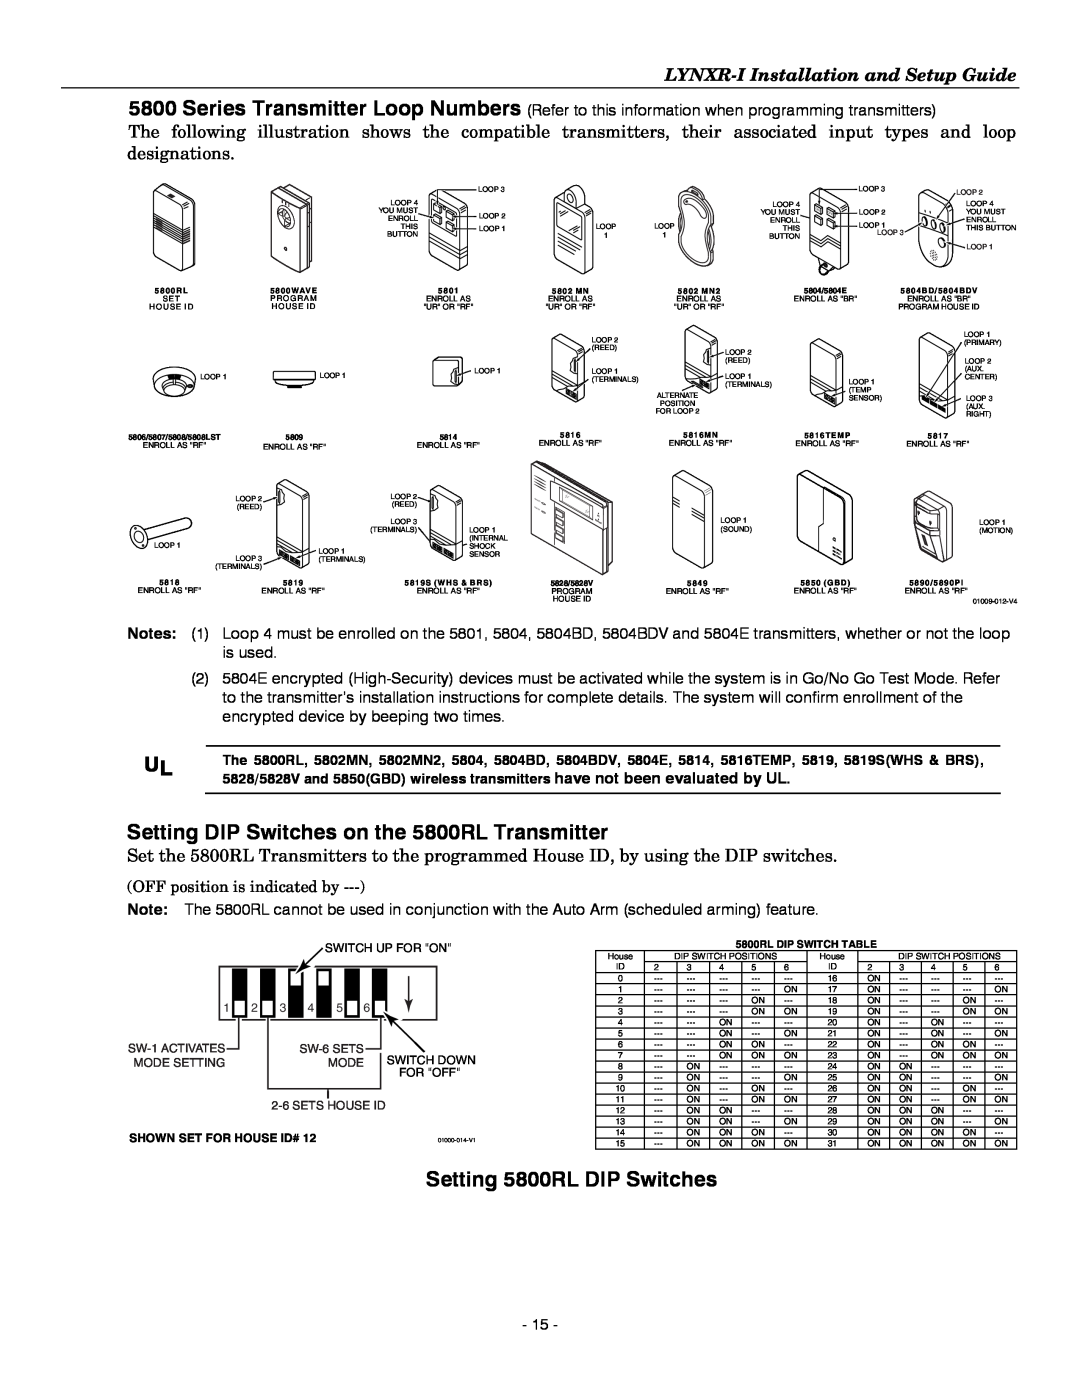 Honeywell K14114 3/06 Rev.B setup guide Setting DIP Switches on the 5800RL Transmitter, Setting 5800RL DIP Switches 